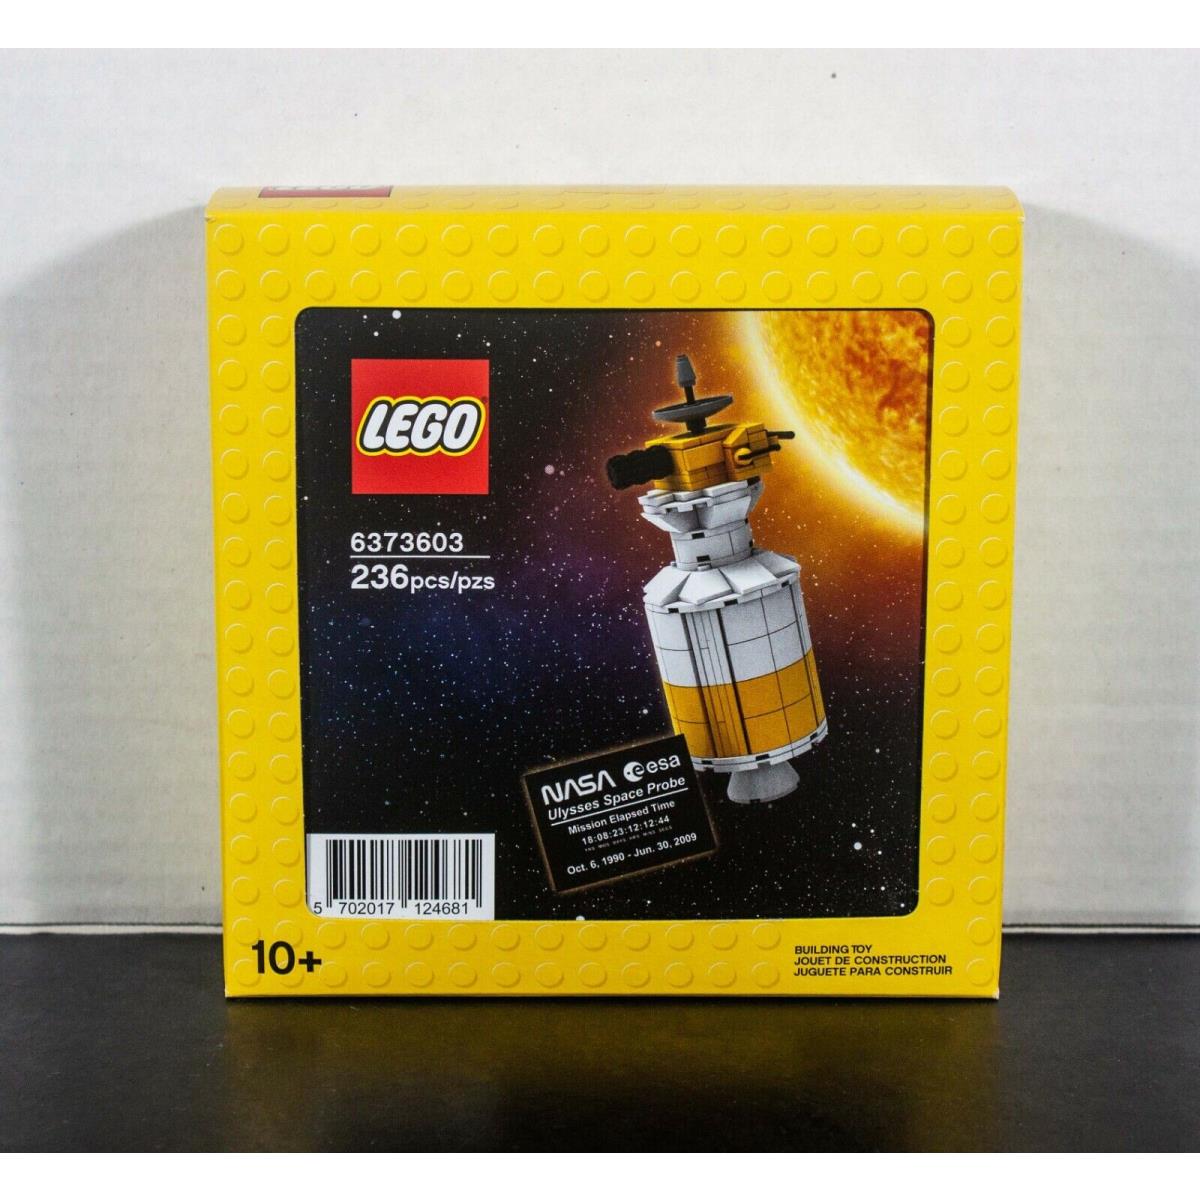 Lego Promo Ulysses Space Probe 5006744 Nasa Satellite Vip Excl 637360